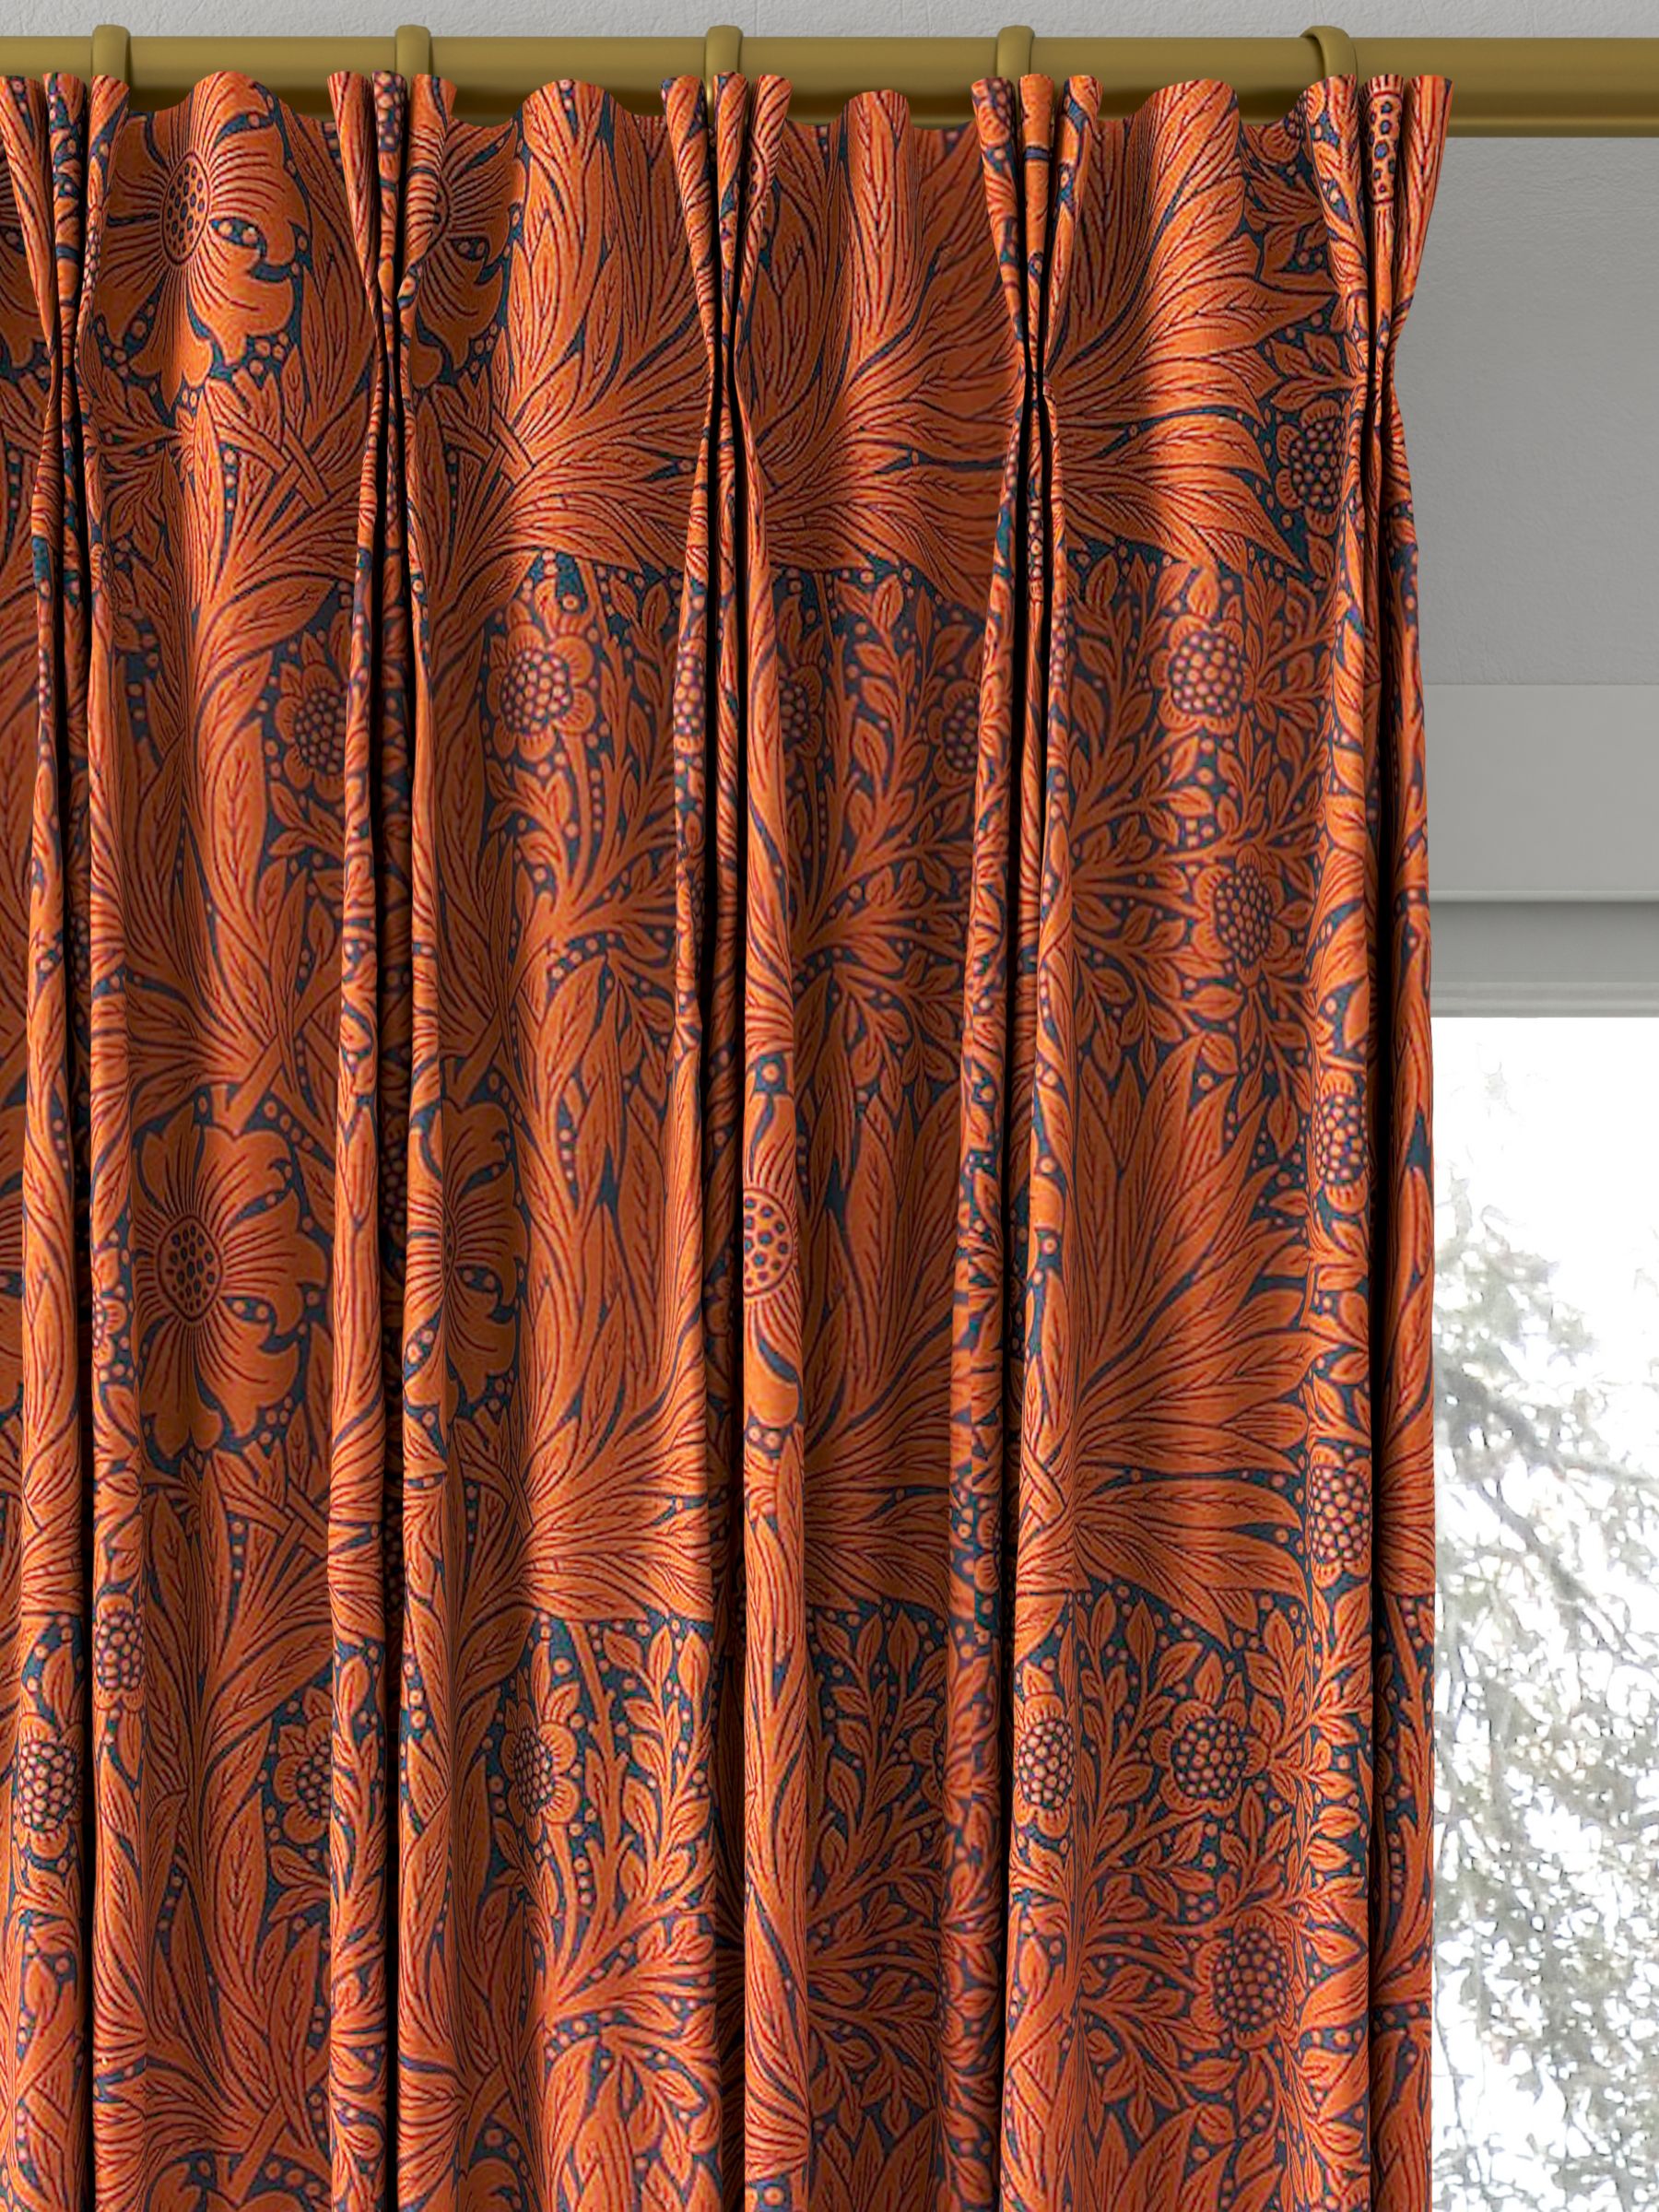 Morris & Co. Ben Pentreath Marigold Made to Measure Curtains, Navy/Burnt Orange